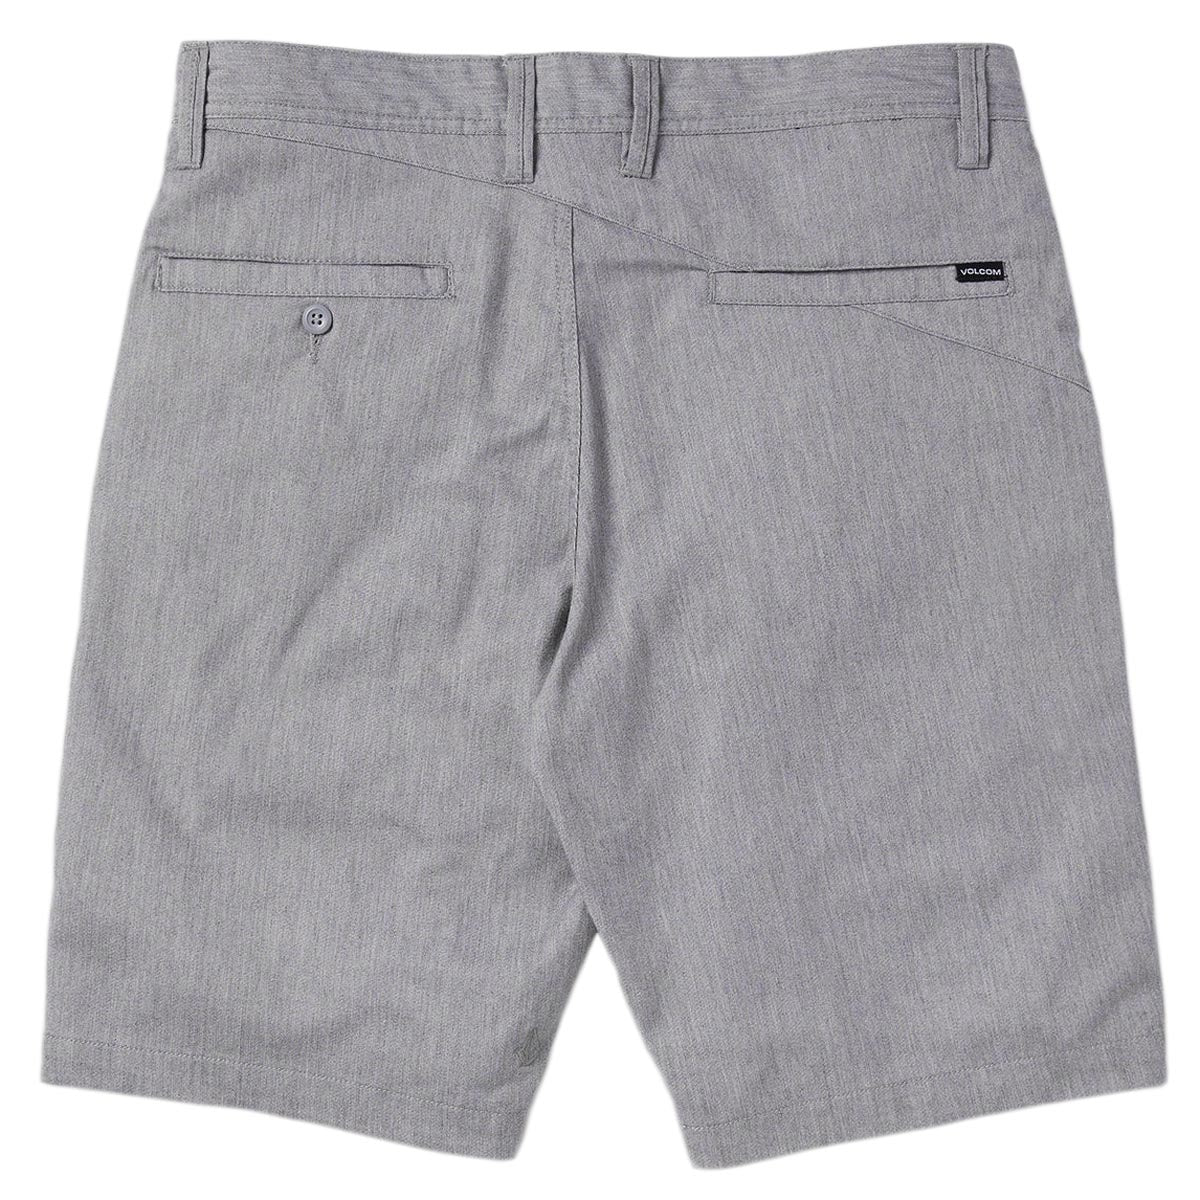 Volcom Frickin Modern Stretch 21 Shorts - Grey image 5